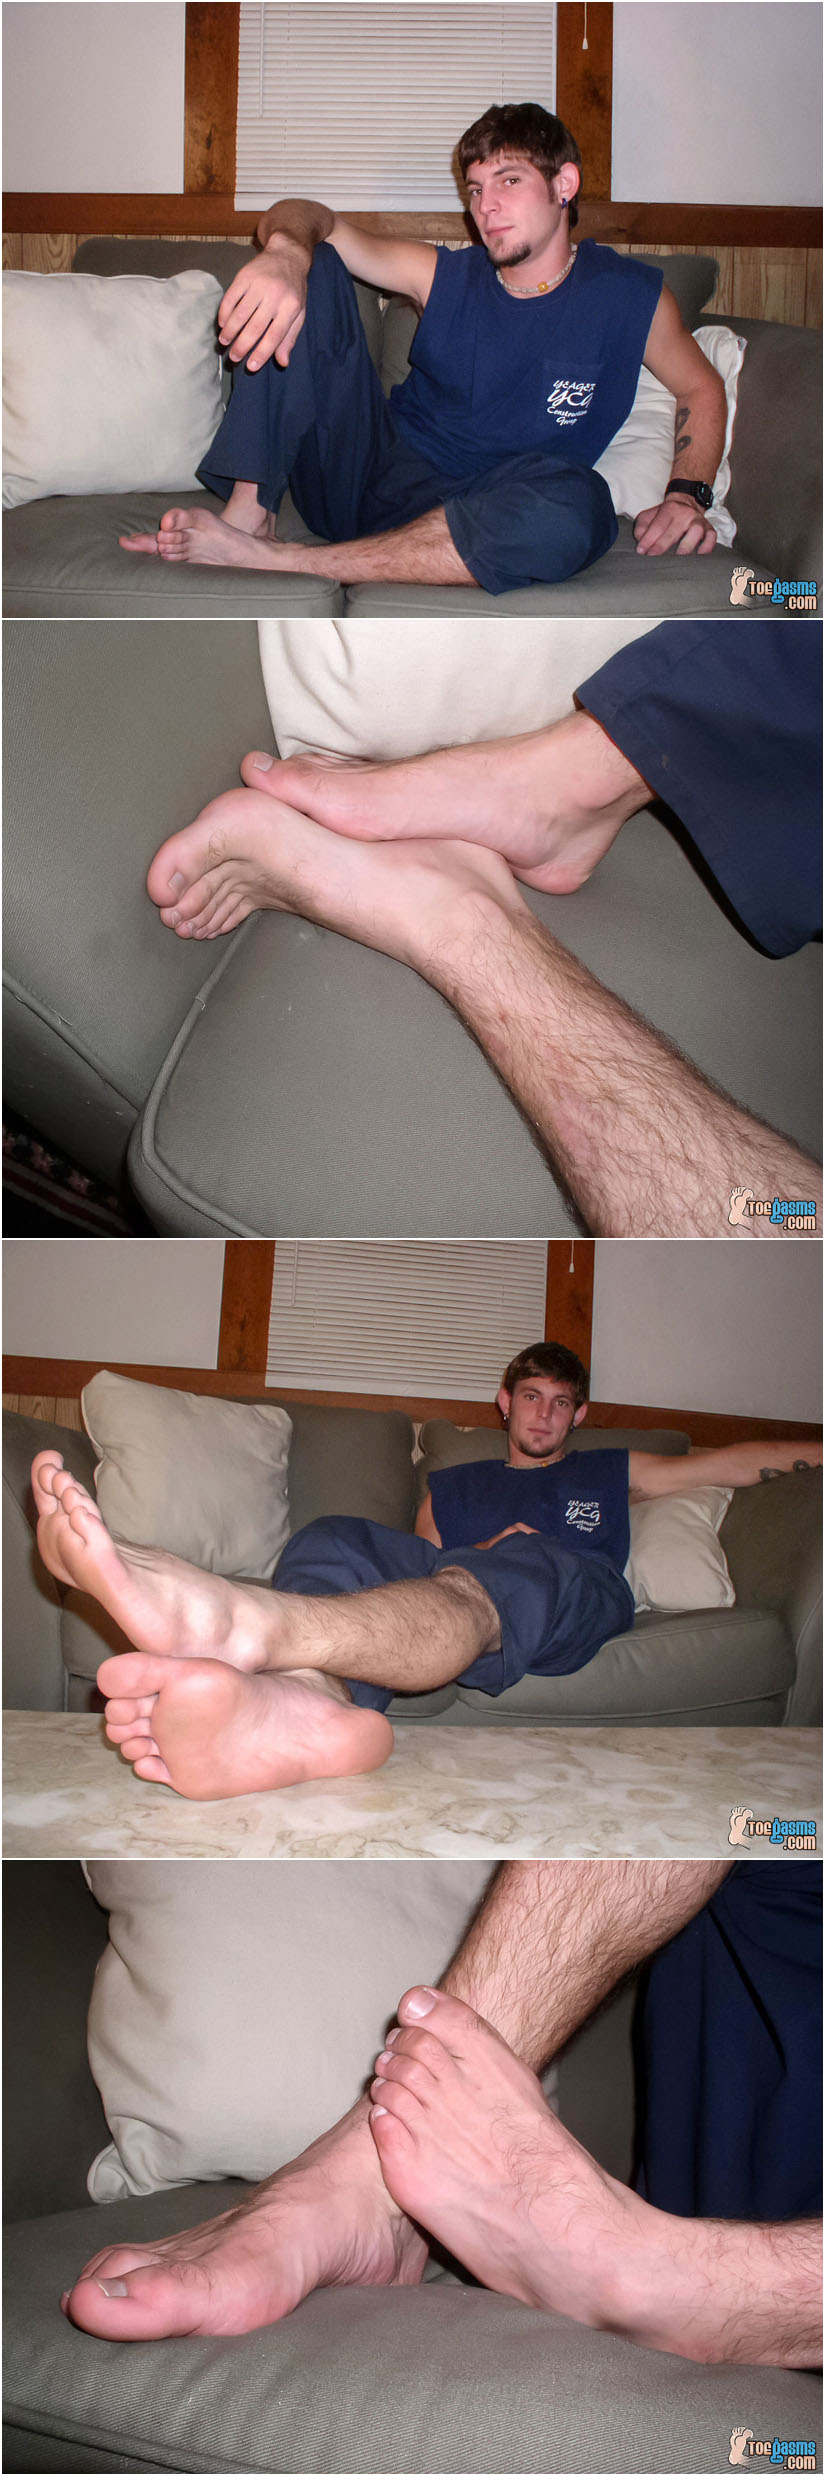 Twinky guy with hairy feet